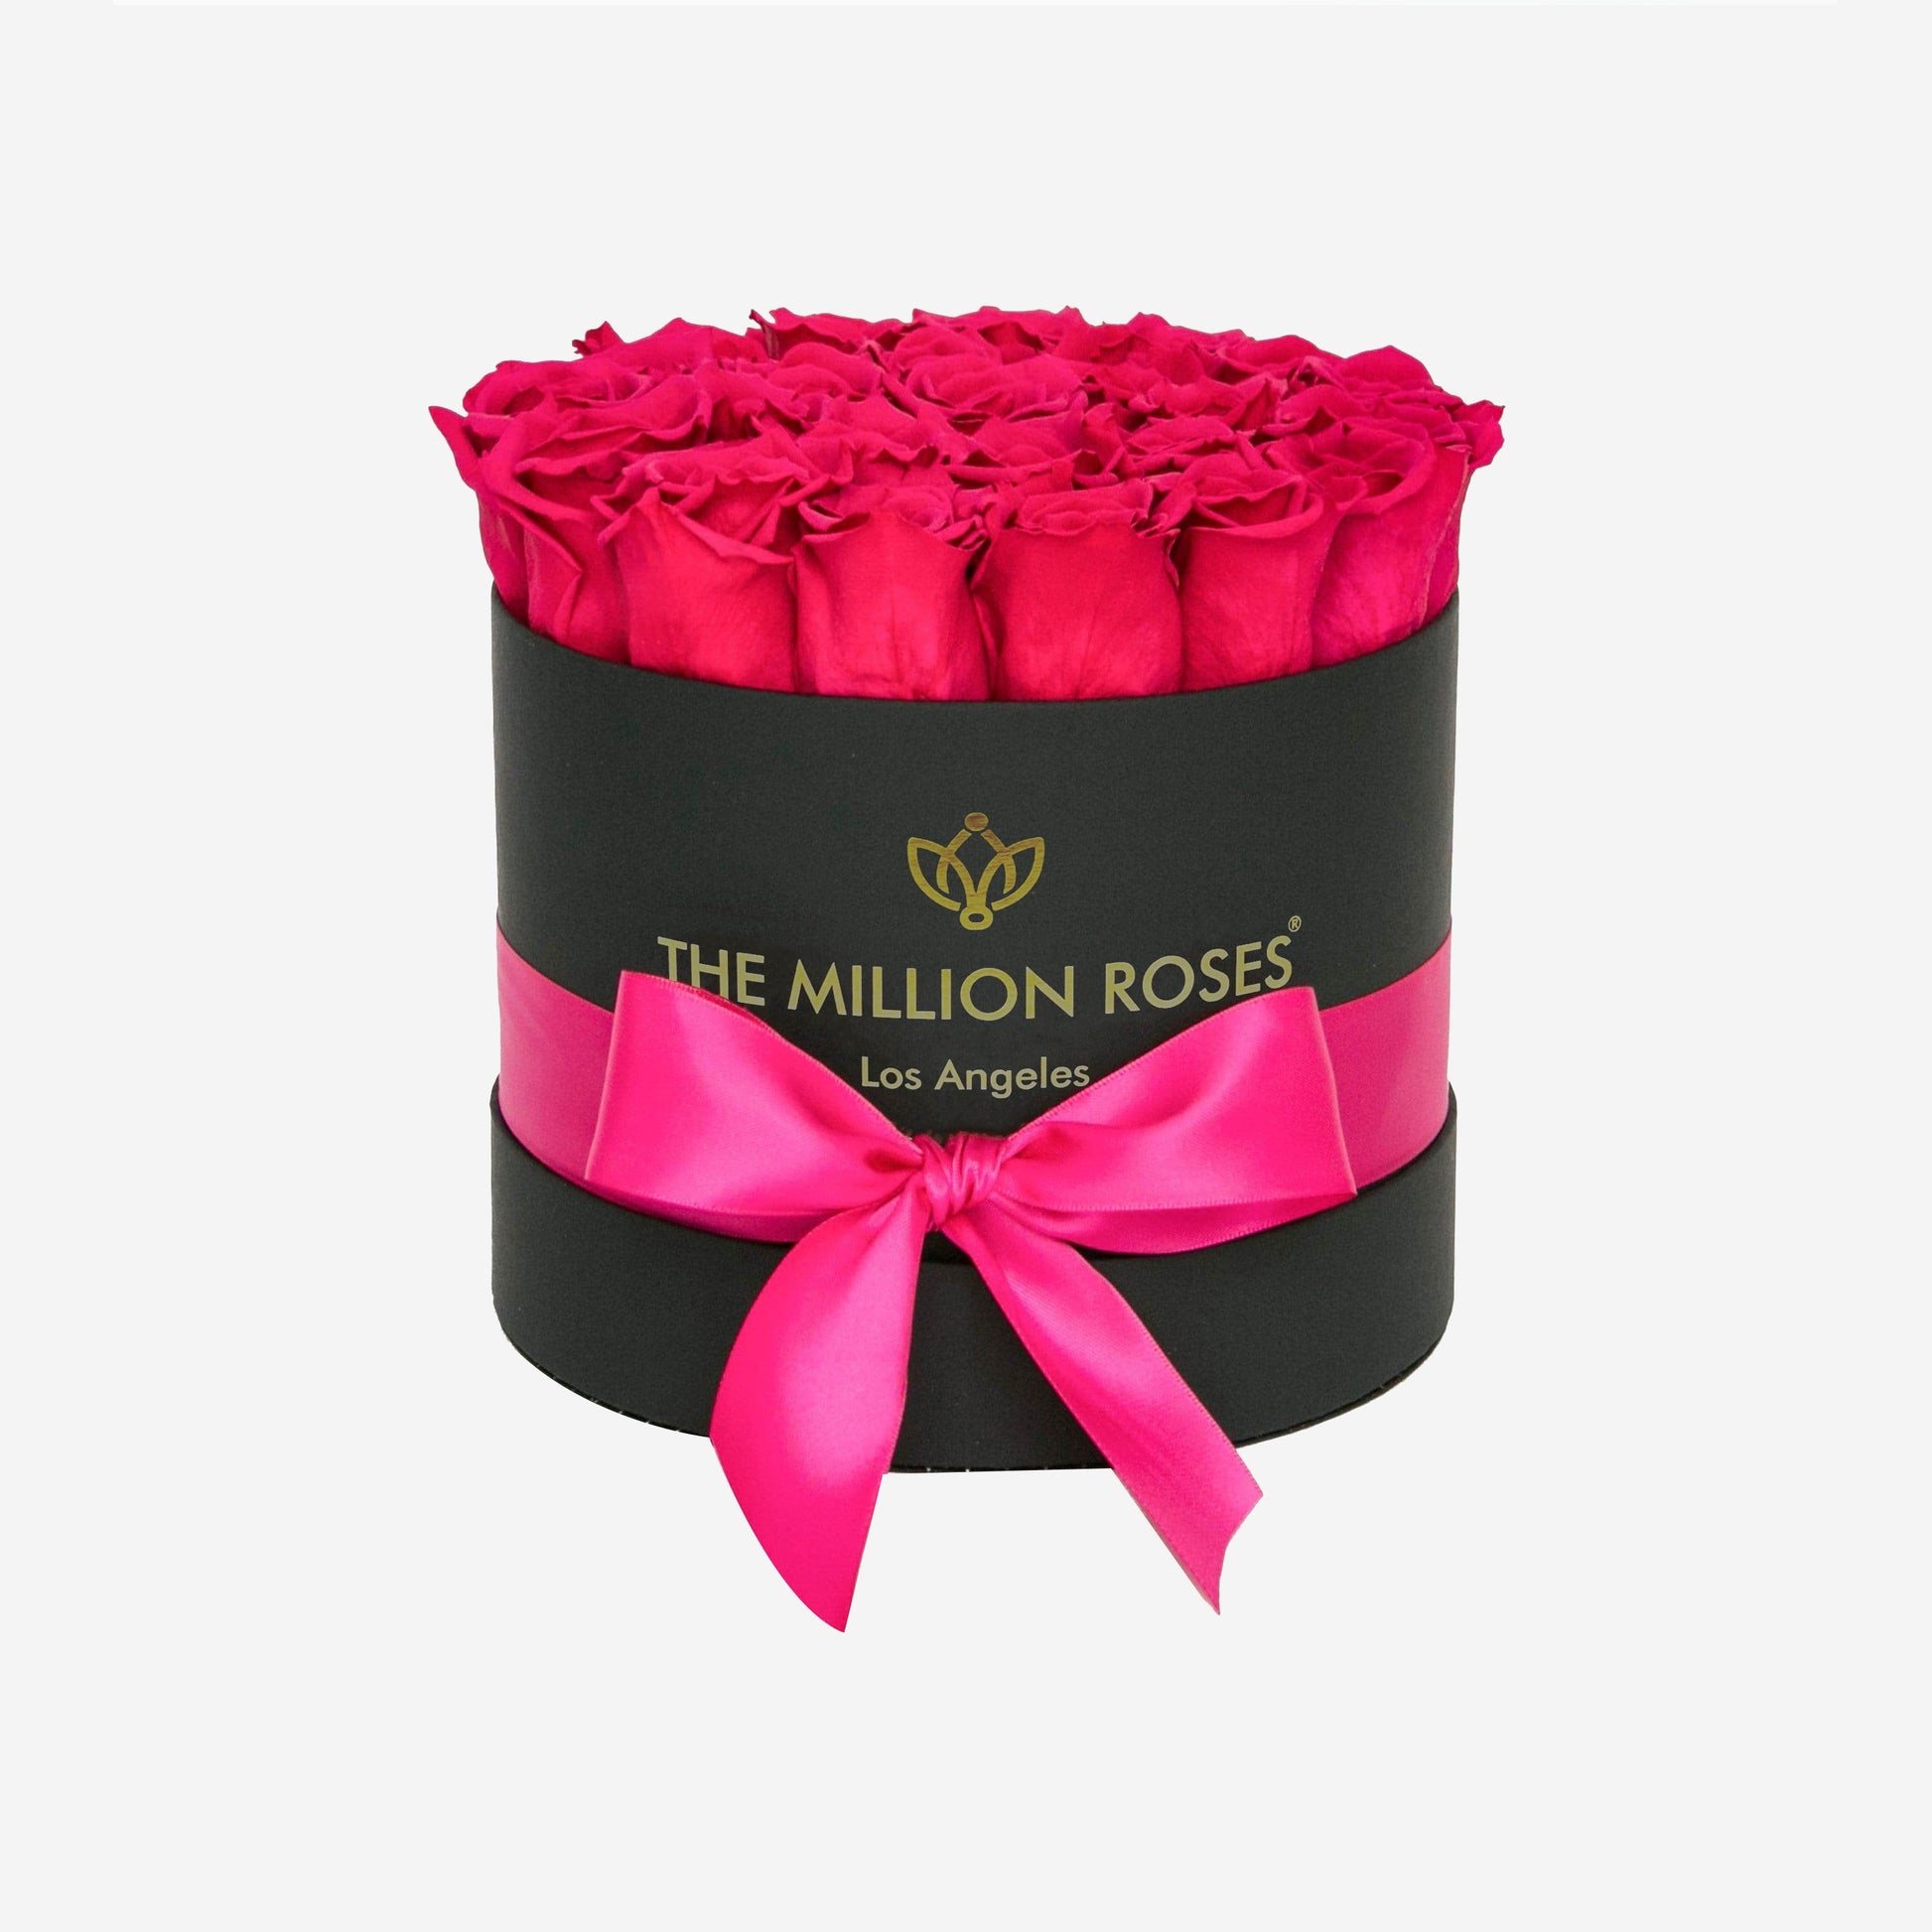 Classic Black Box | Hot Pink Roses - The Million Roses